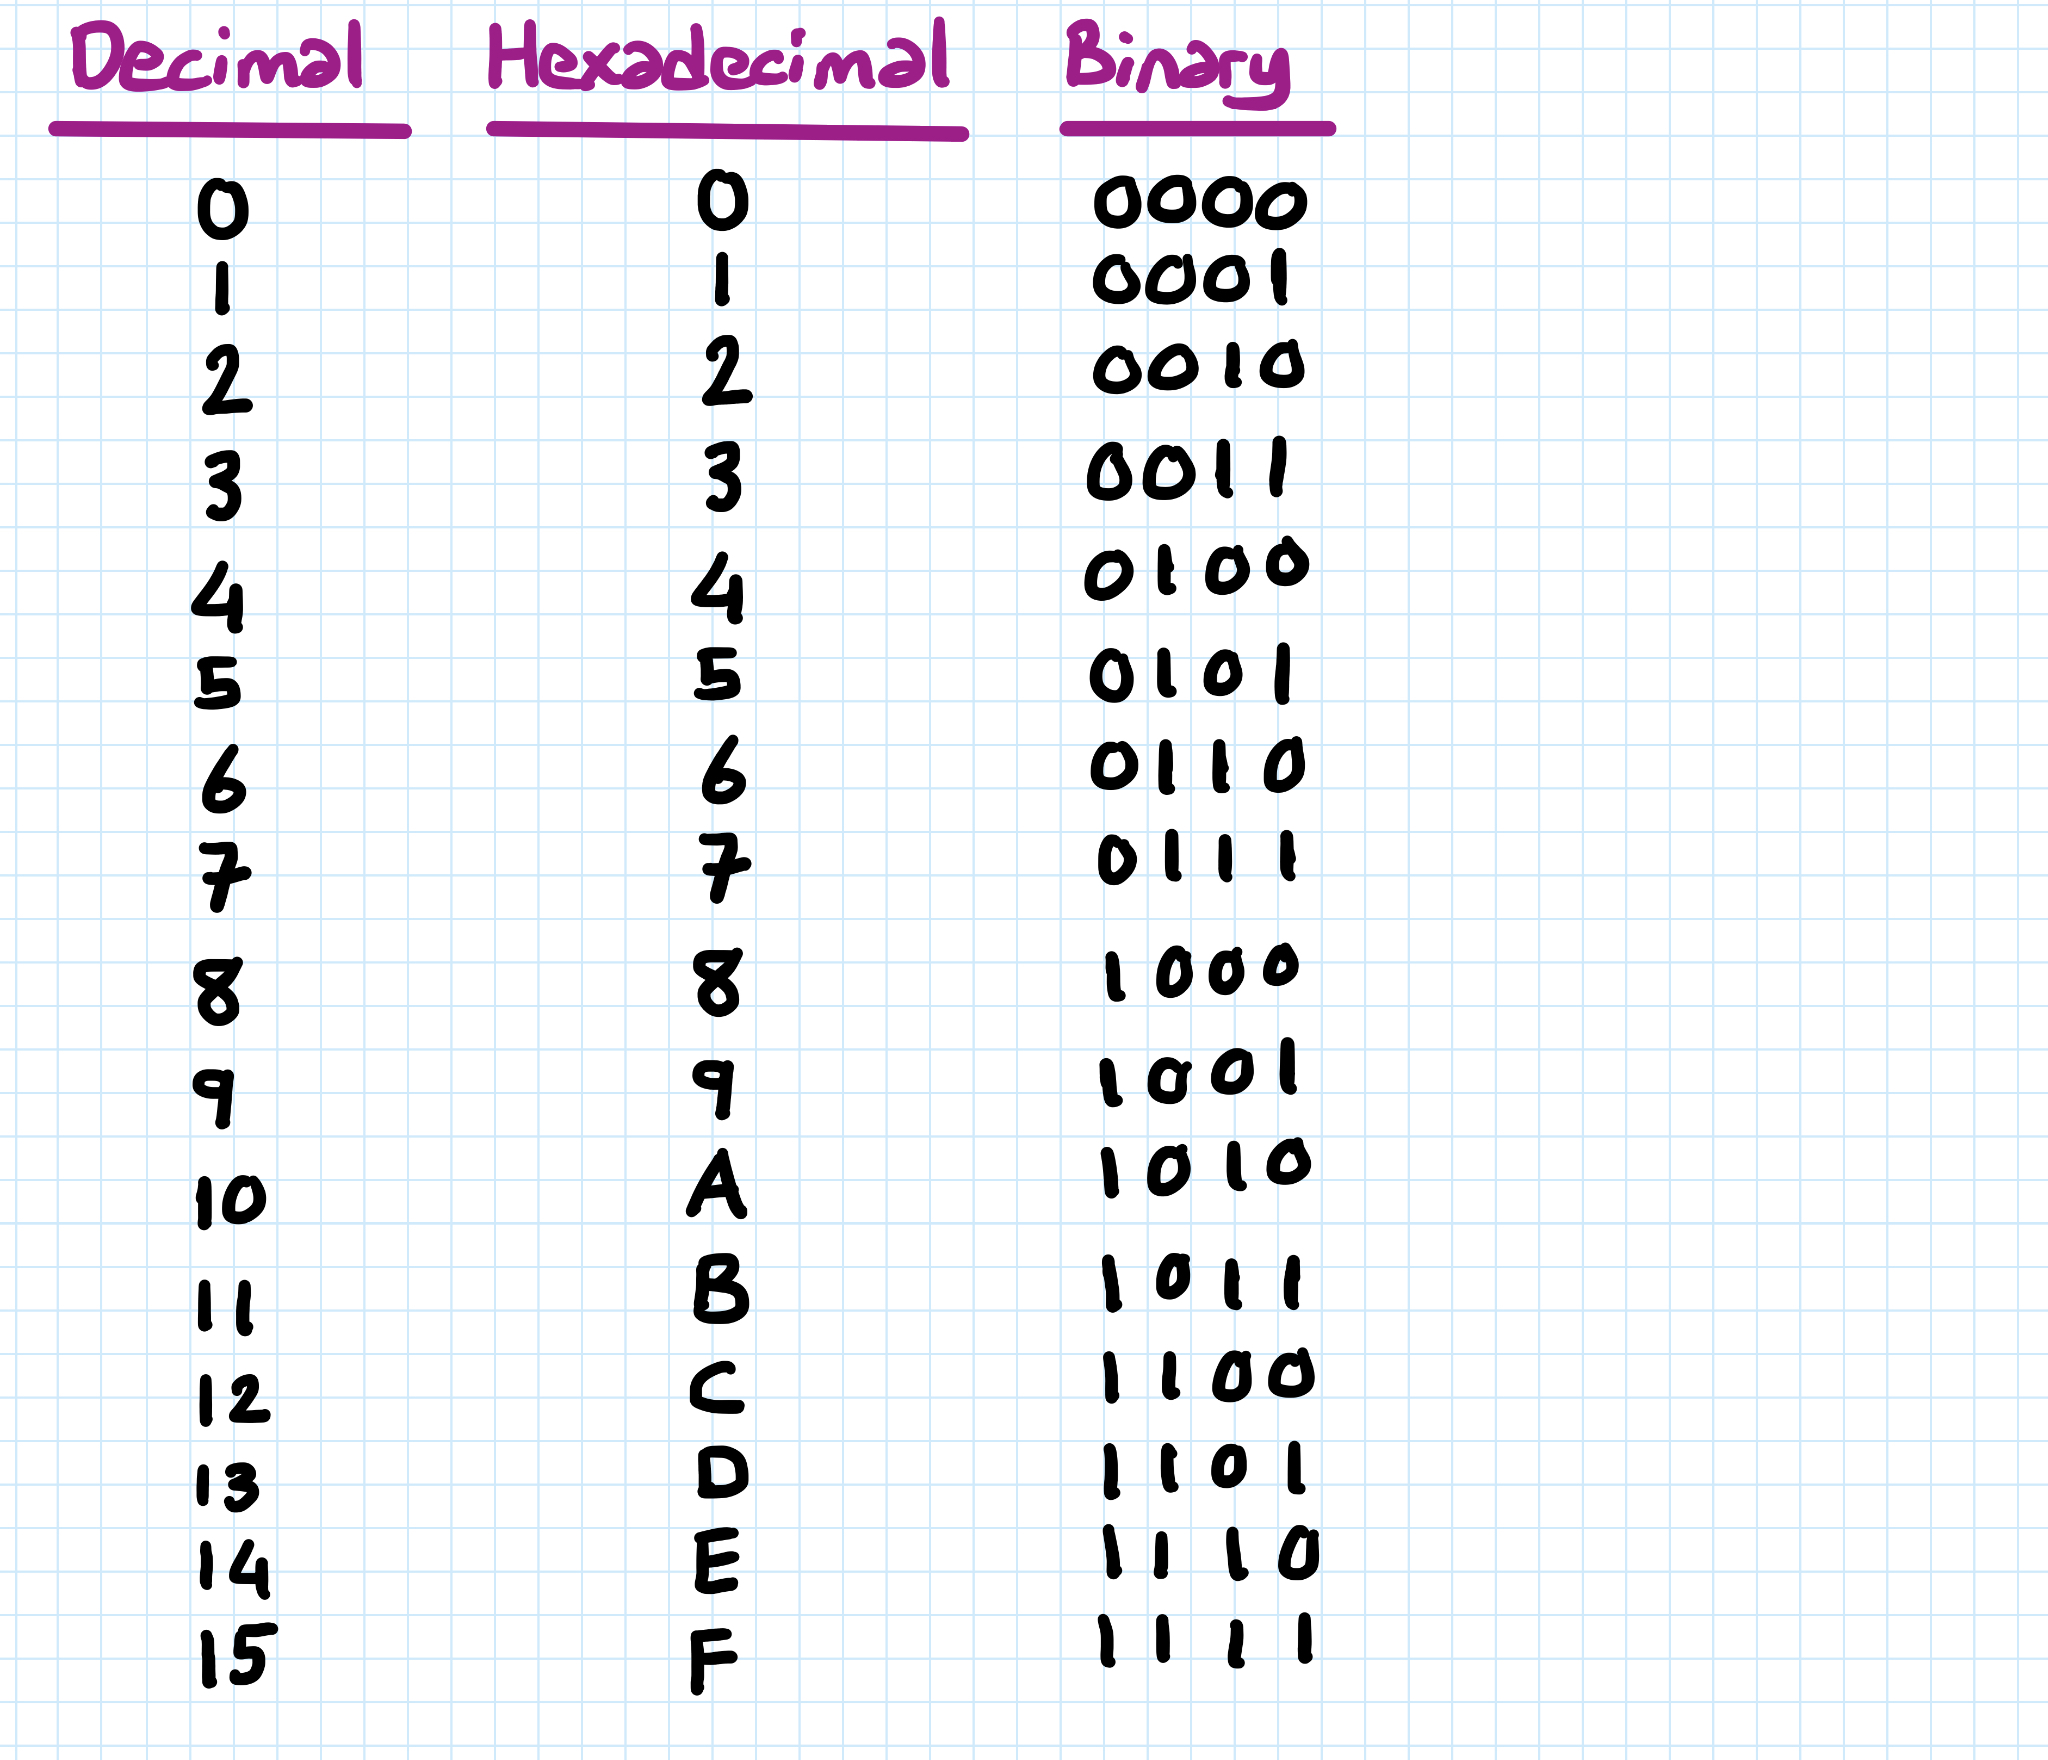 binary-hexadecimal-and-decimal-number-systems-kenan-han-er-blog